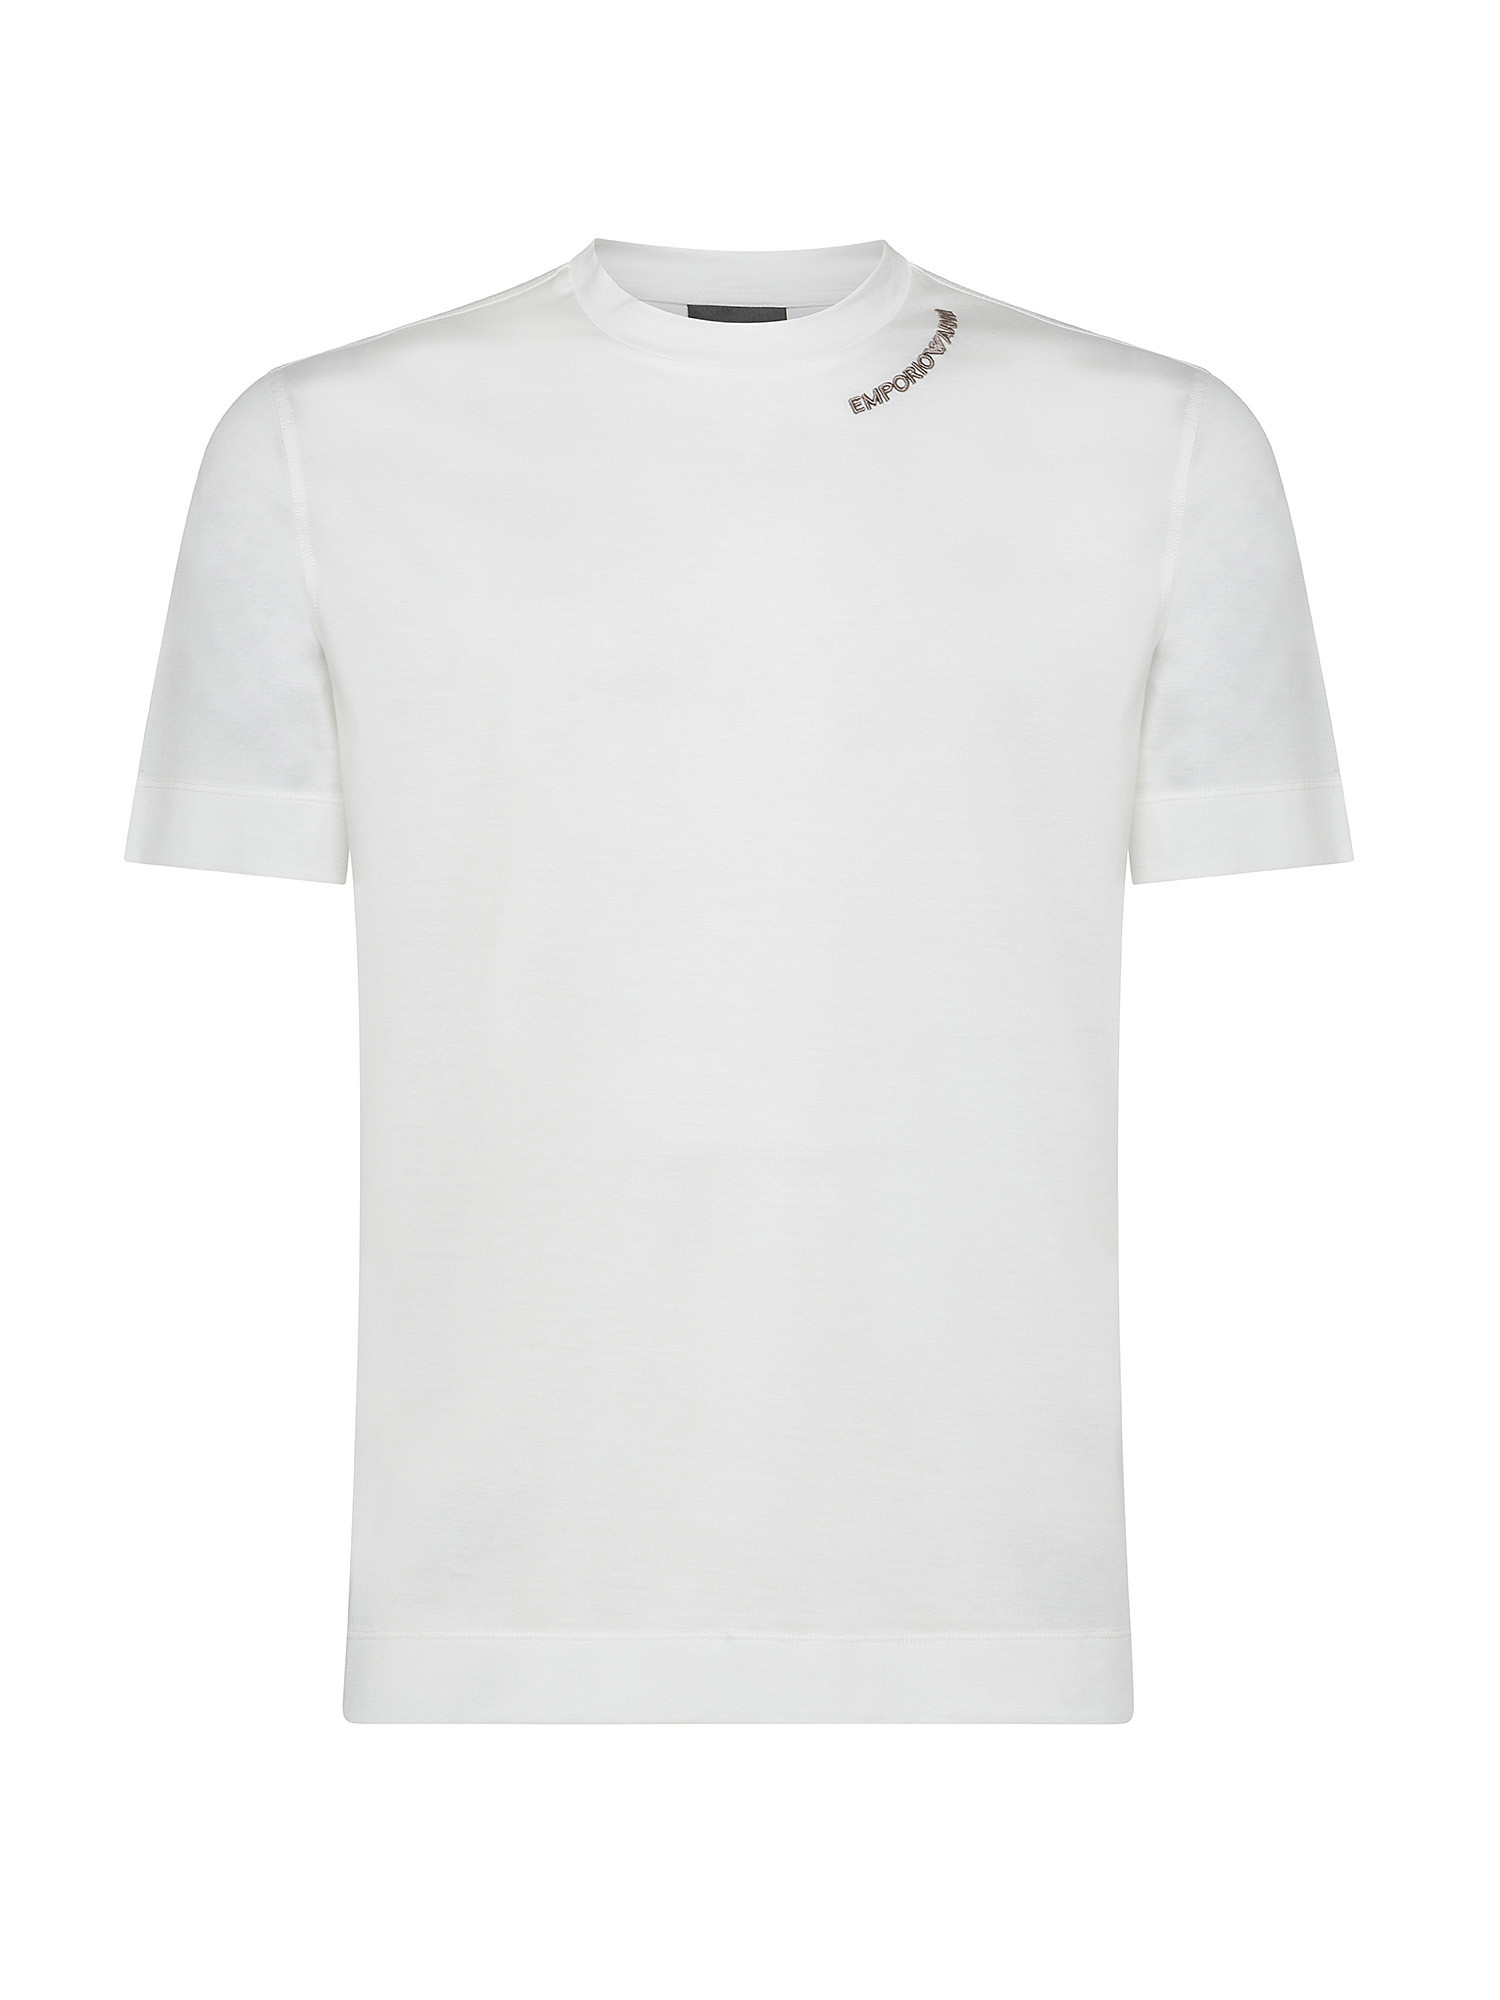 Emporio Armani - T-shirt con logo ricamato, White, large image number 0